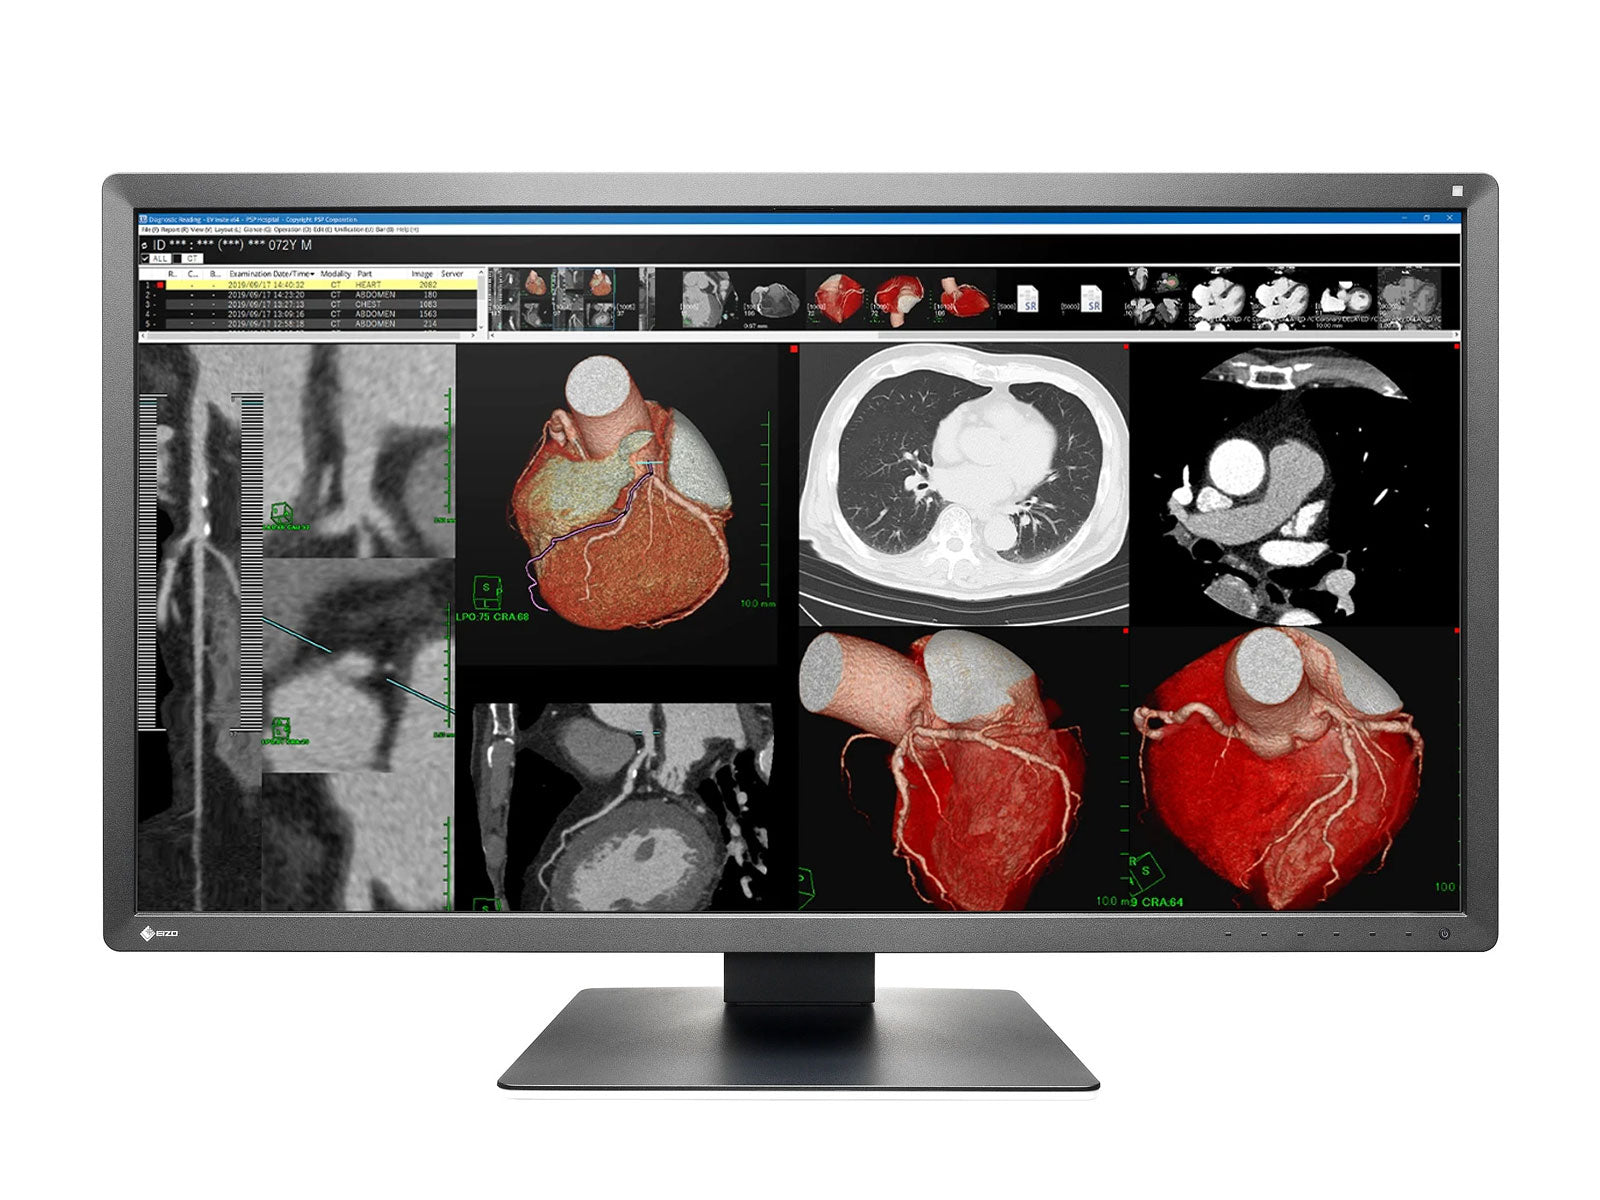 Eizo RadiForce MX317W 8MP 30" Color Clinical Review Display Monitor (MX317W-BK)